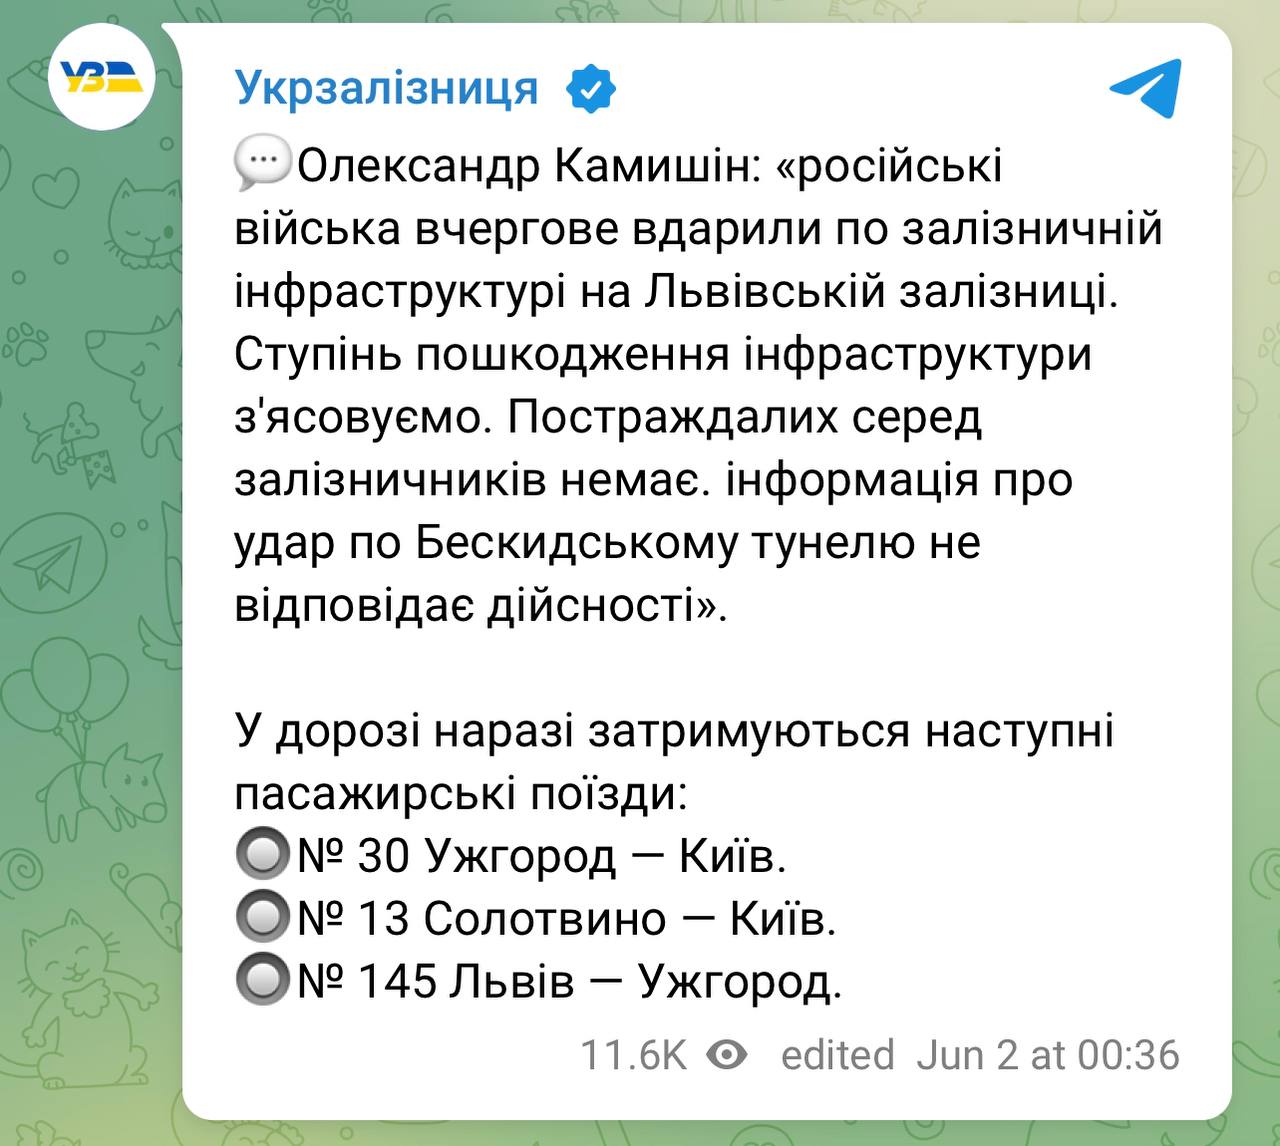 Телеграмм труха украина война фото 8